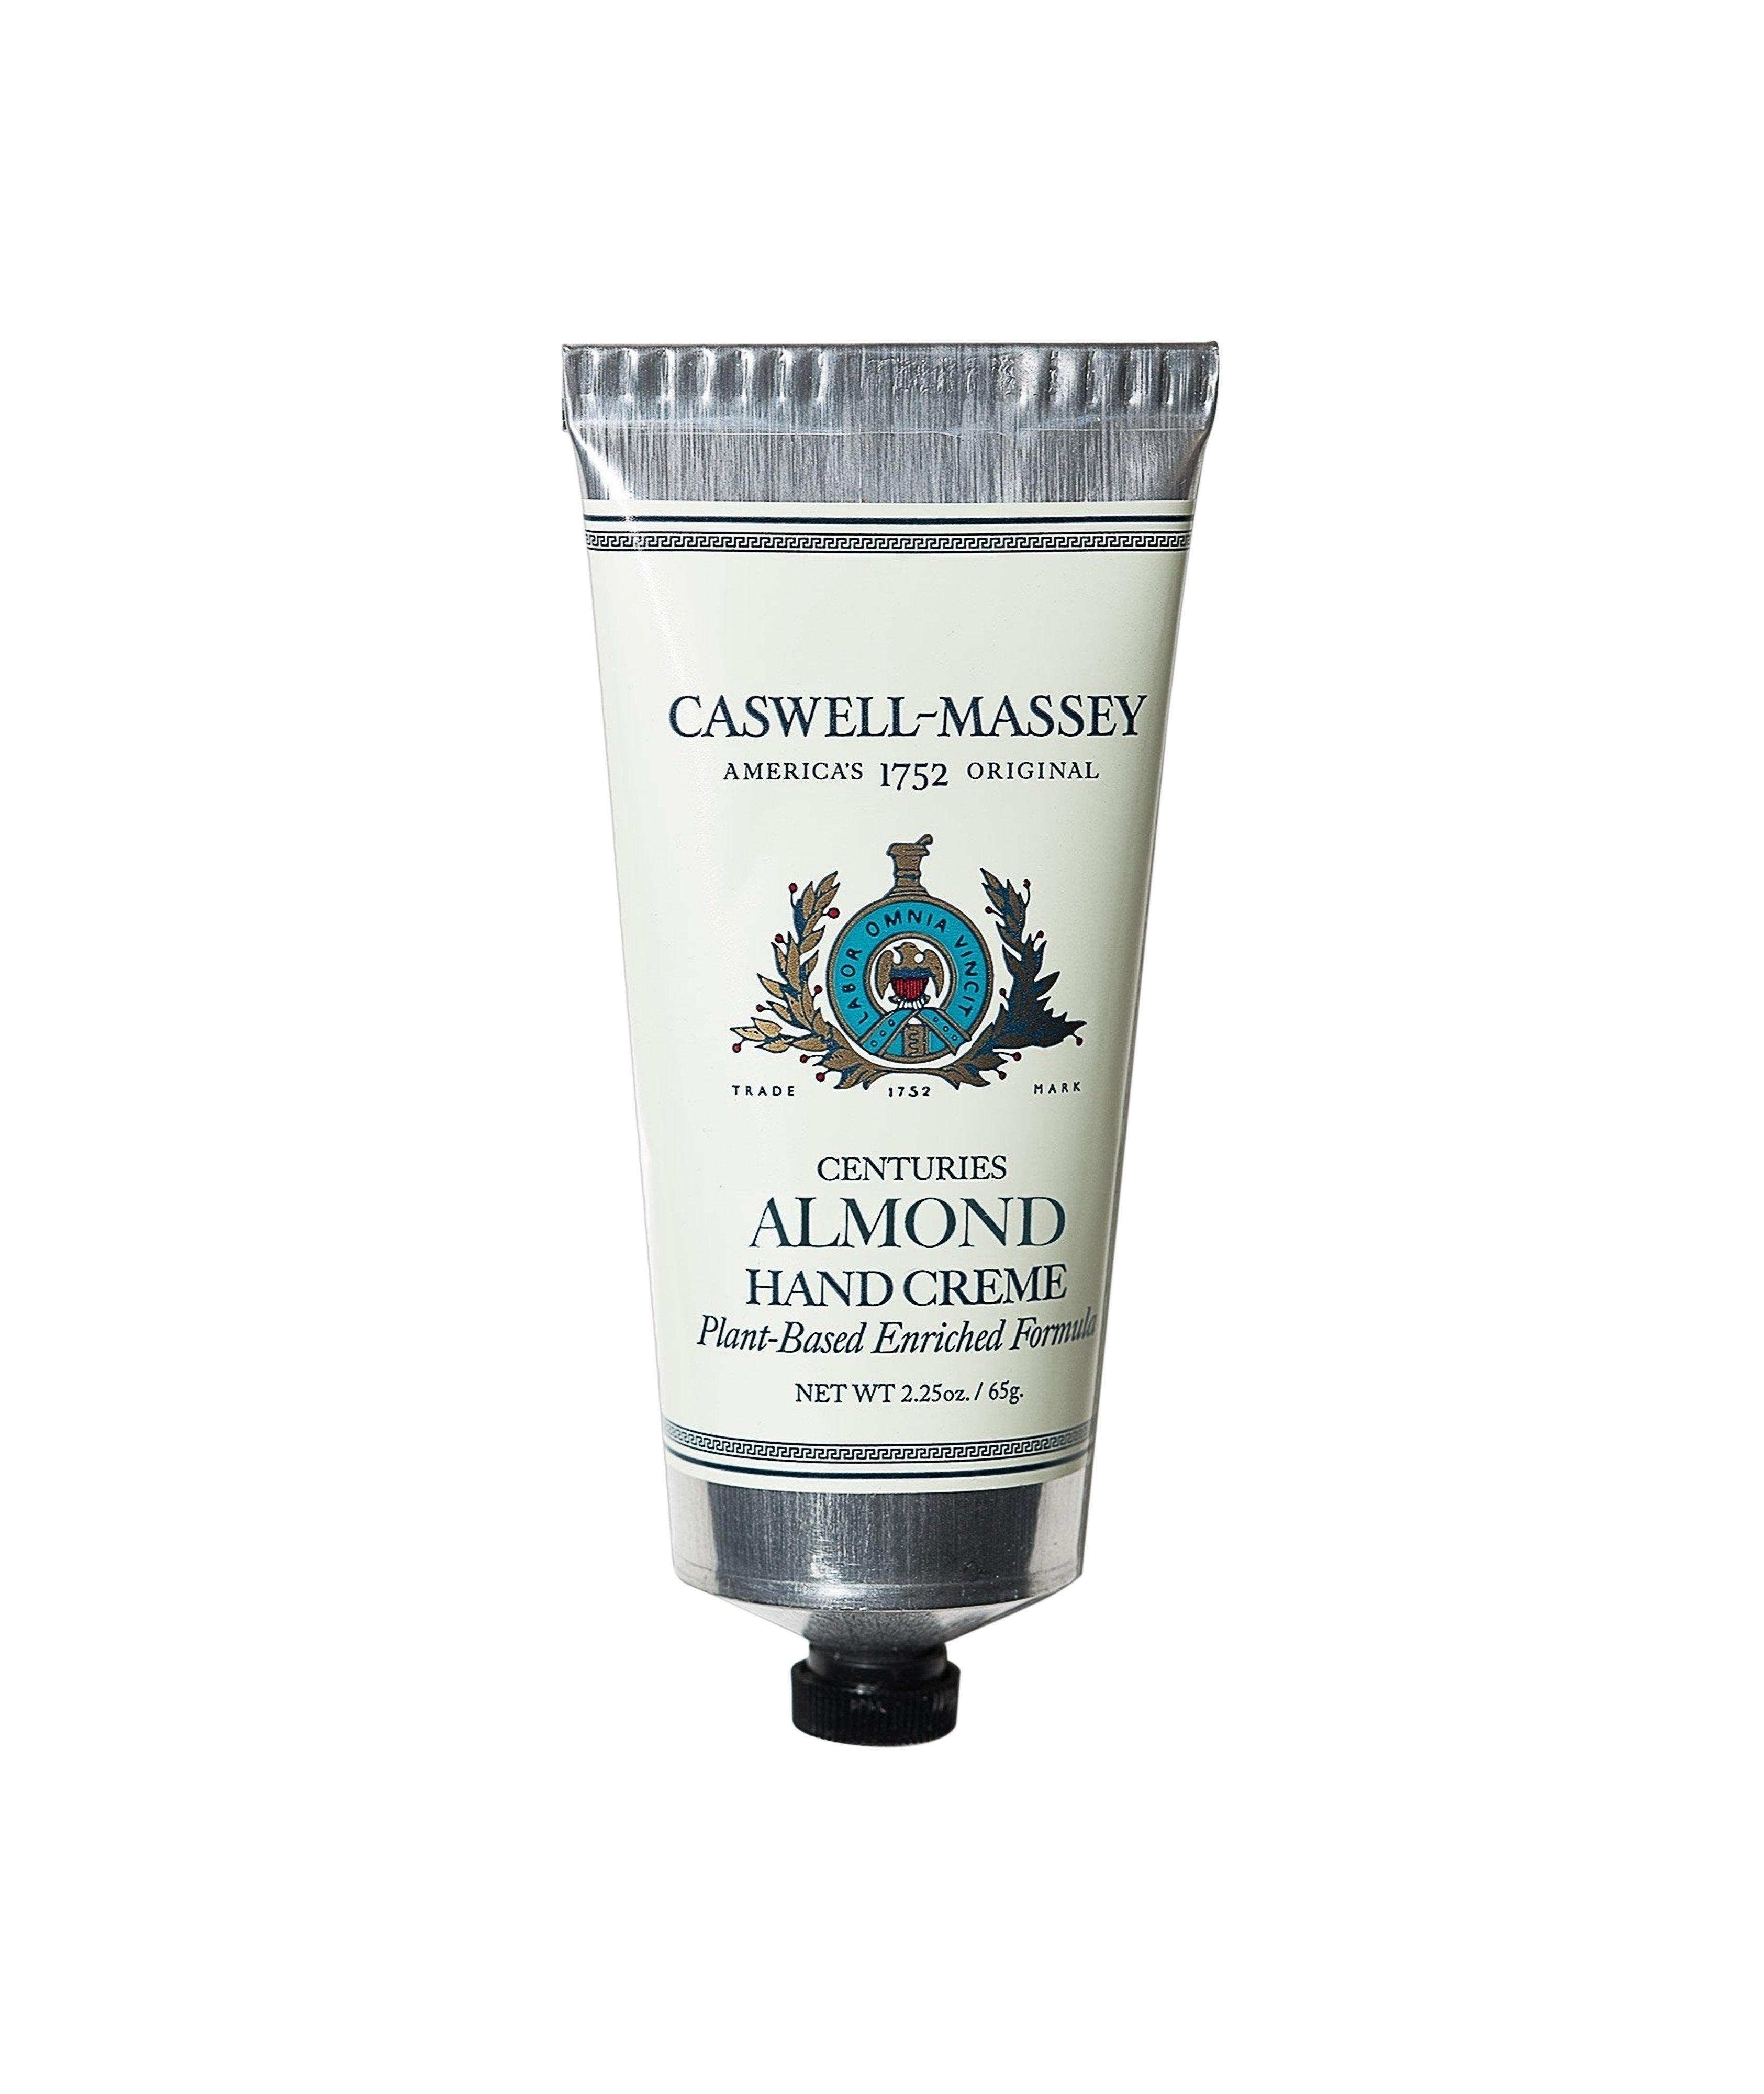 Caswell Massey Centuries Almond Hand Cream image 0